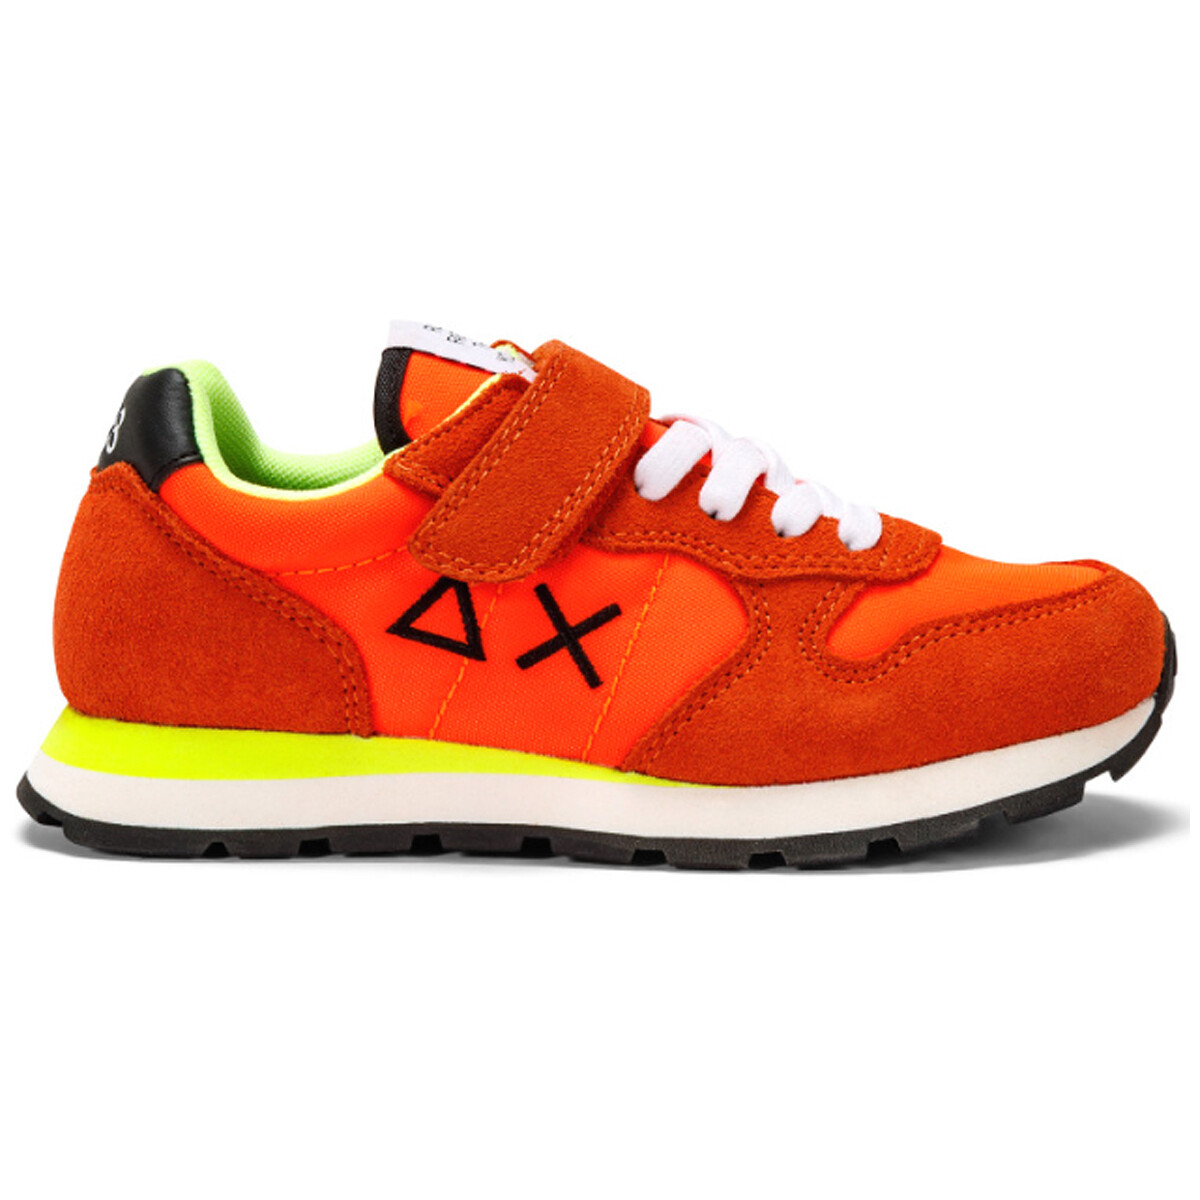 Schuhe Kinder Sneaker Sun68 Z33301-64 Orange